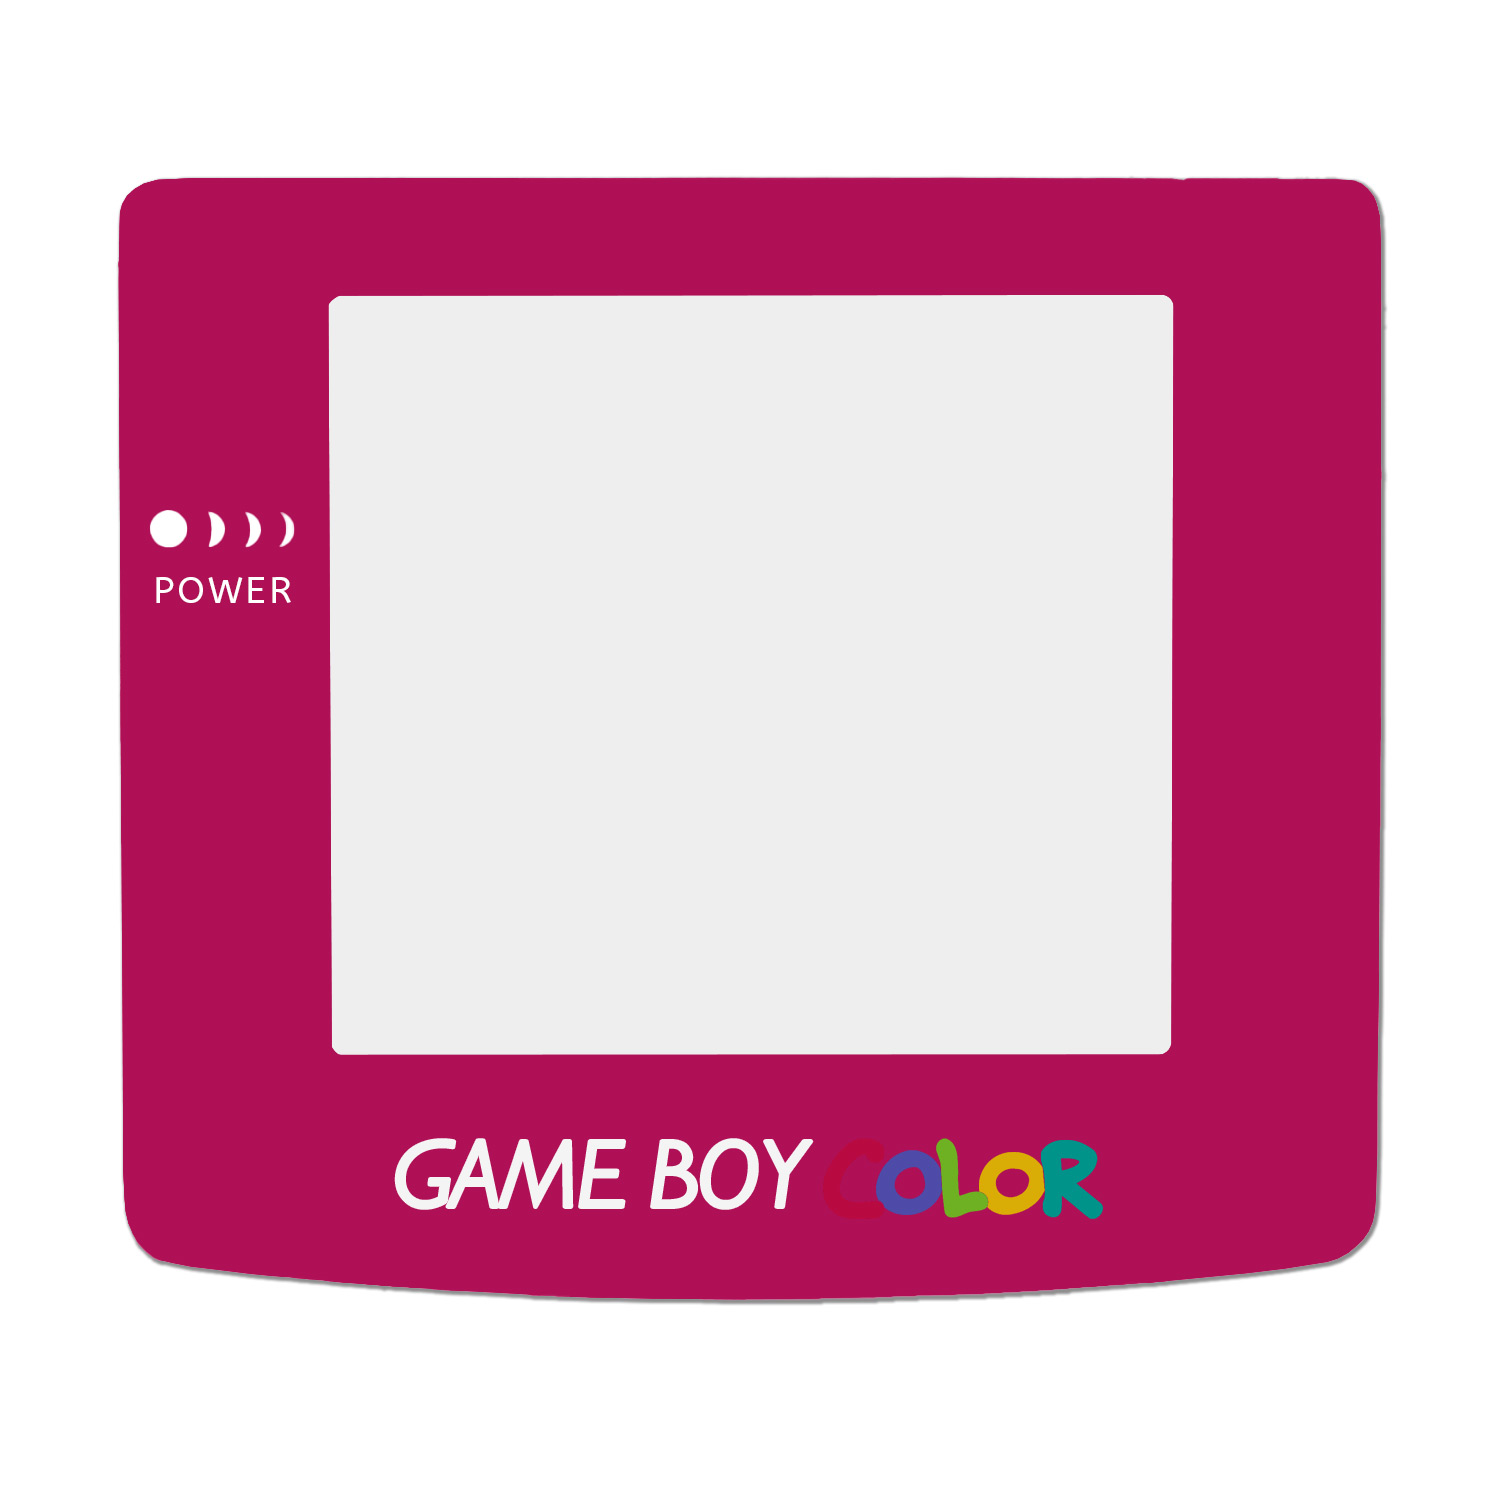 Game Boy Color Display Disc (Pink)